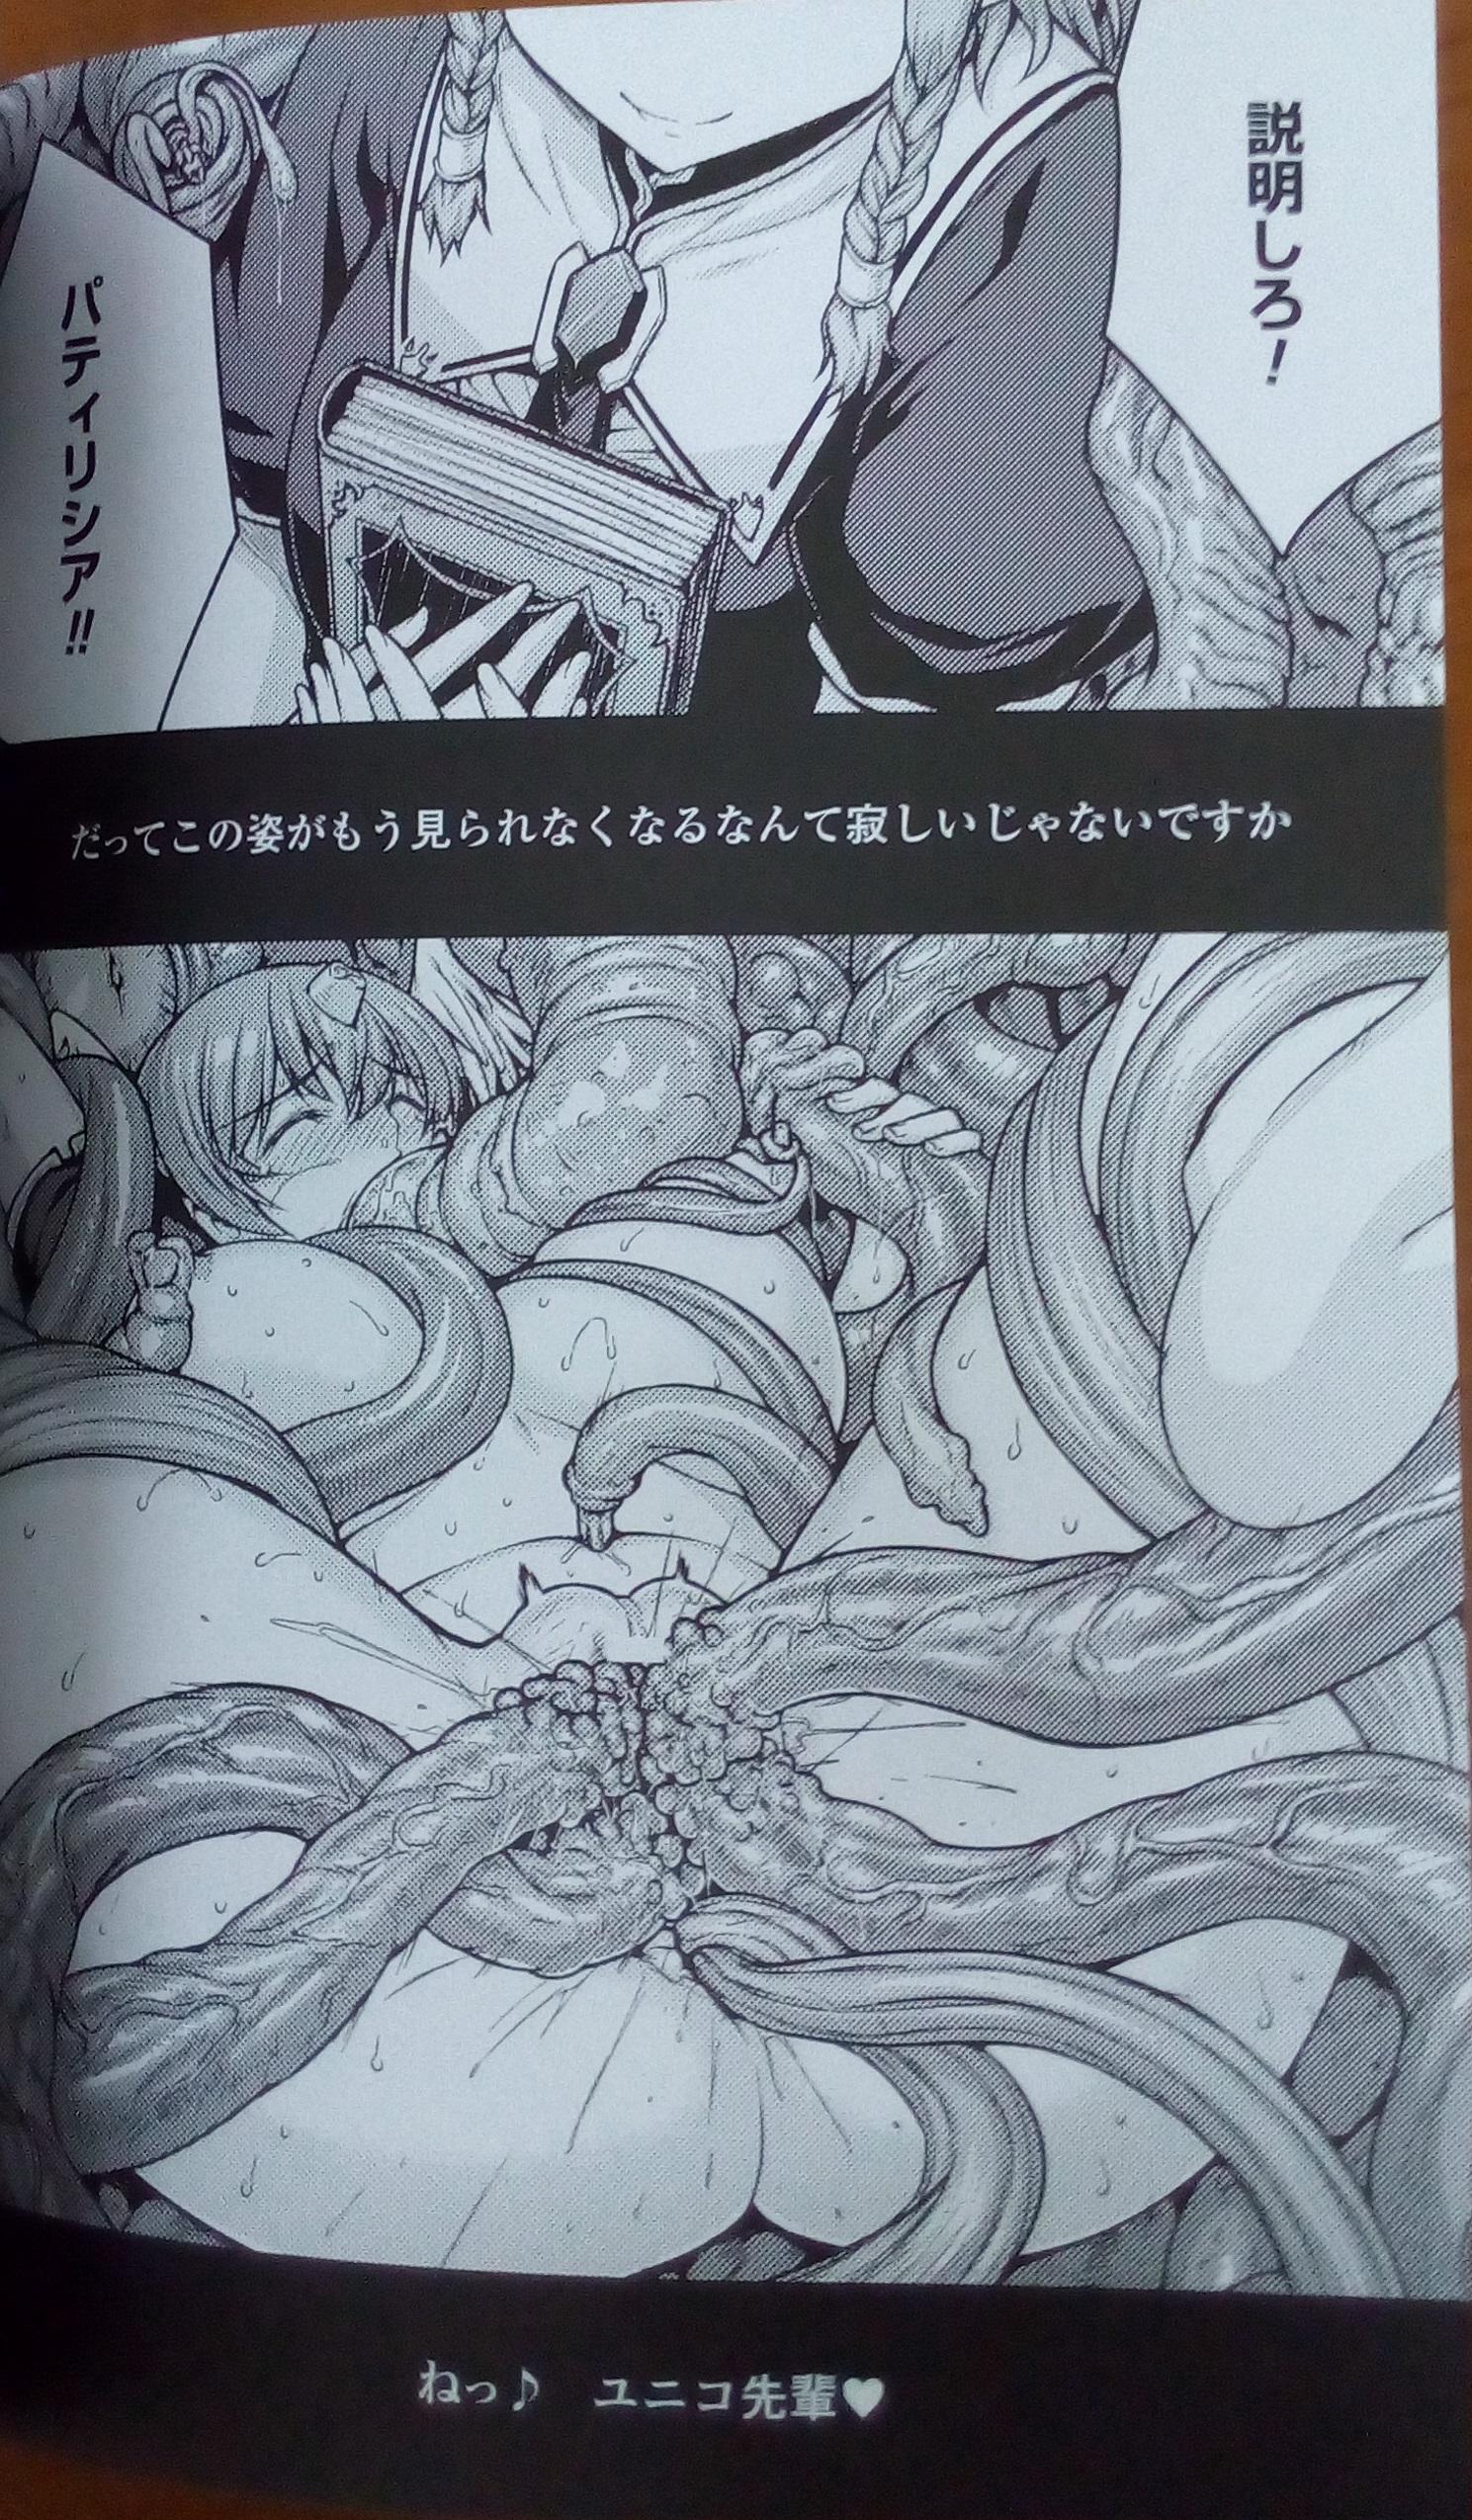 [Erect Sawaru] Shinkyoku no Grimoire III -PANDRA saga 2nd story-  Append book [Photoed] 22